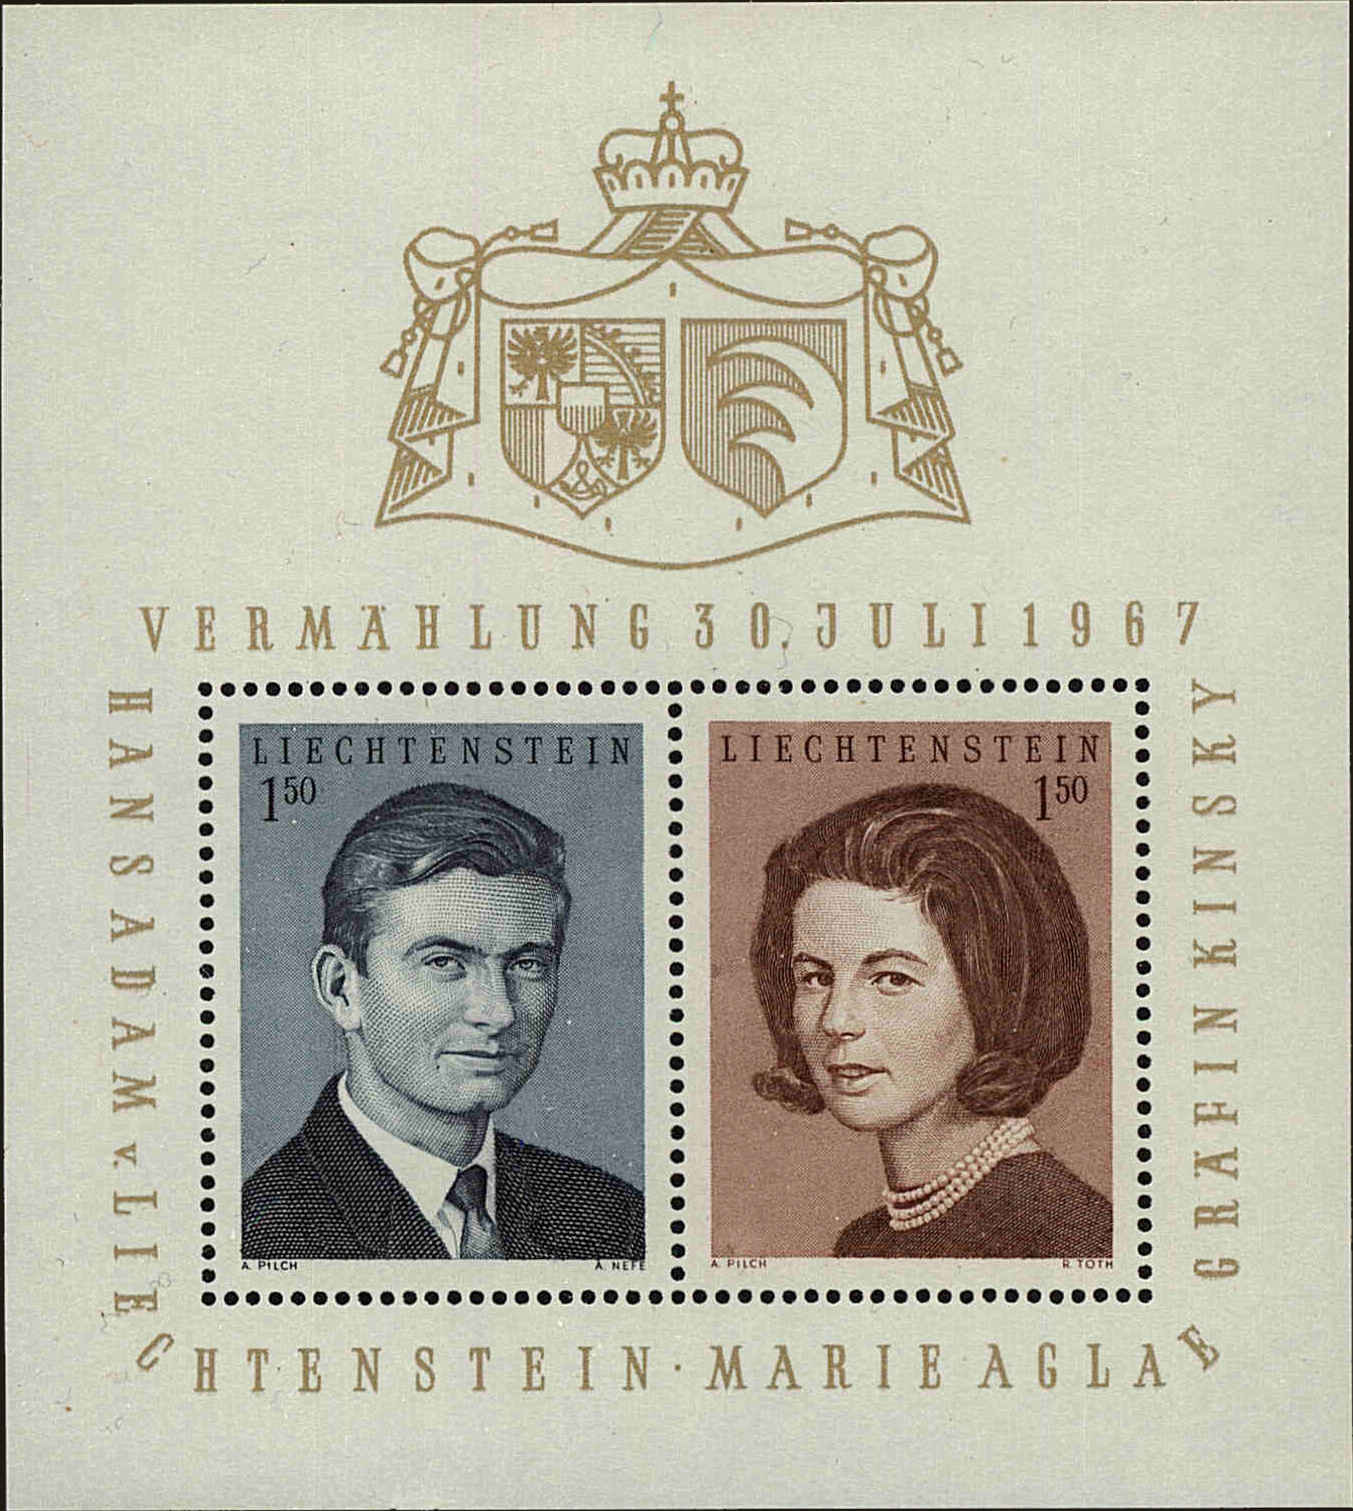 Front view of Liechtenstein 424 collectors stamp